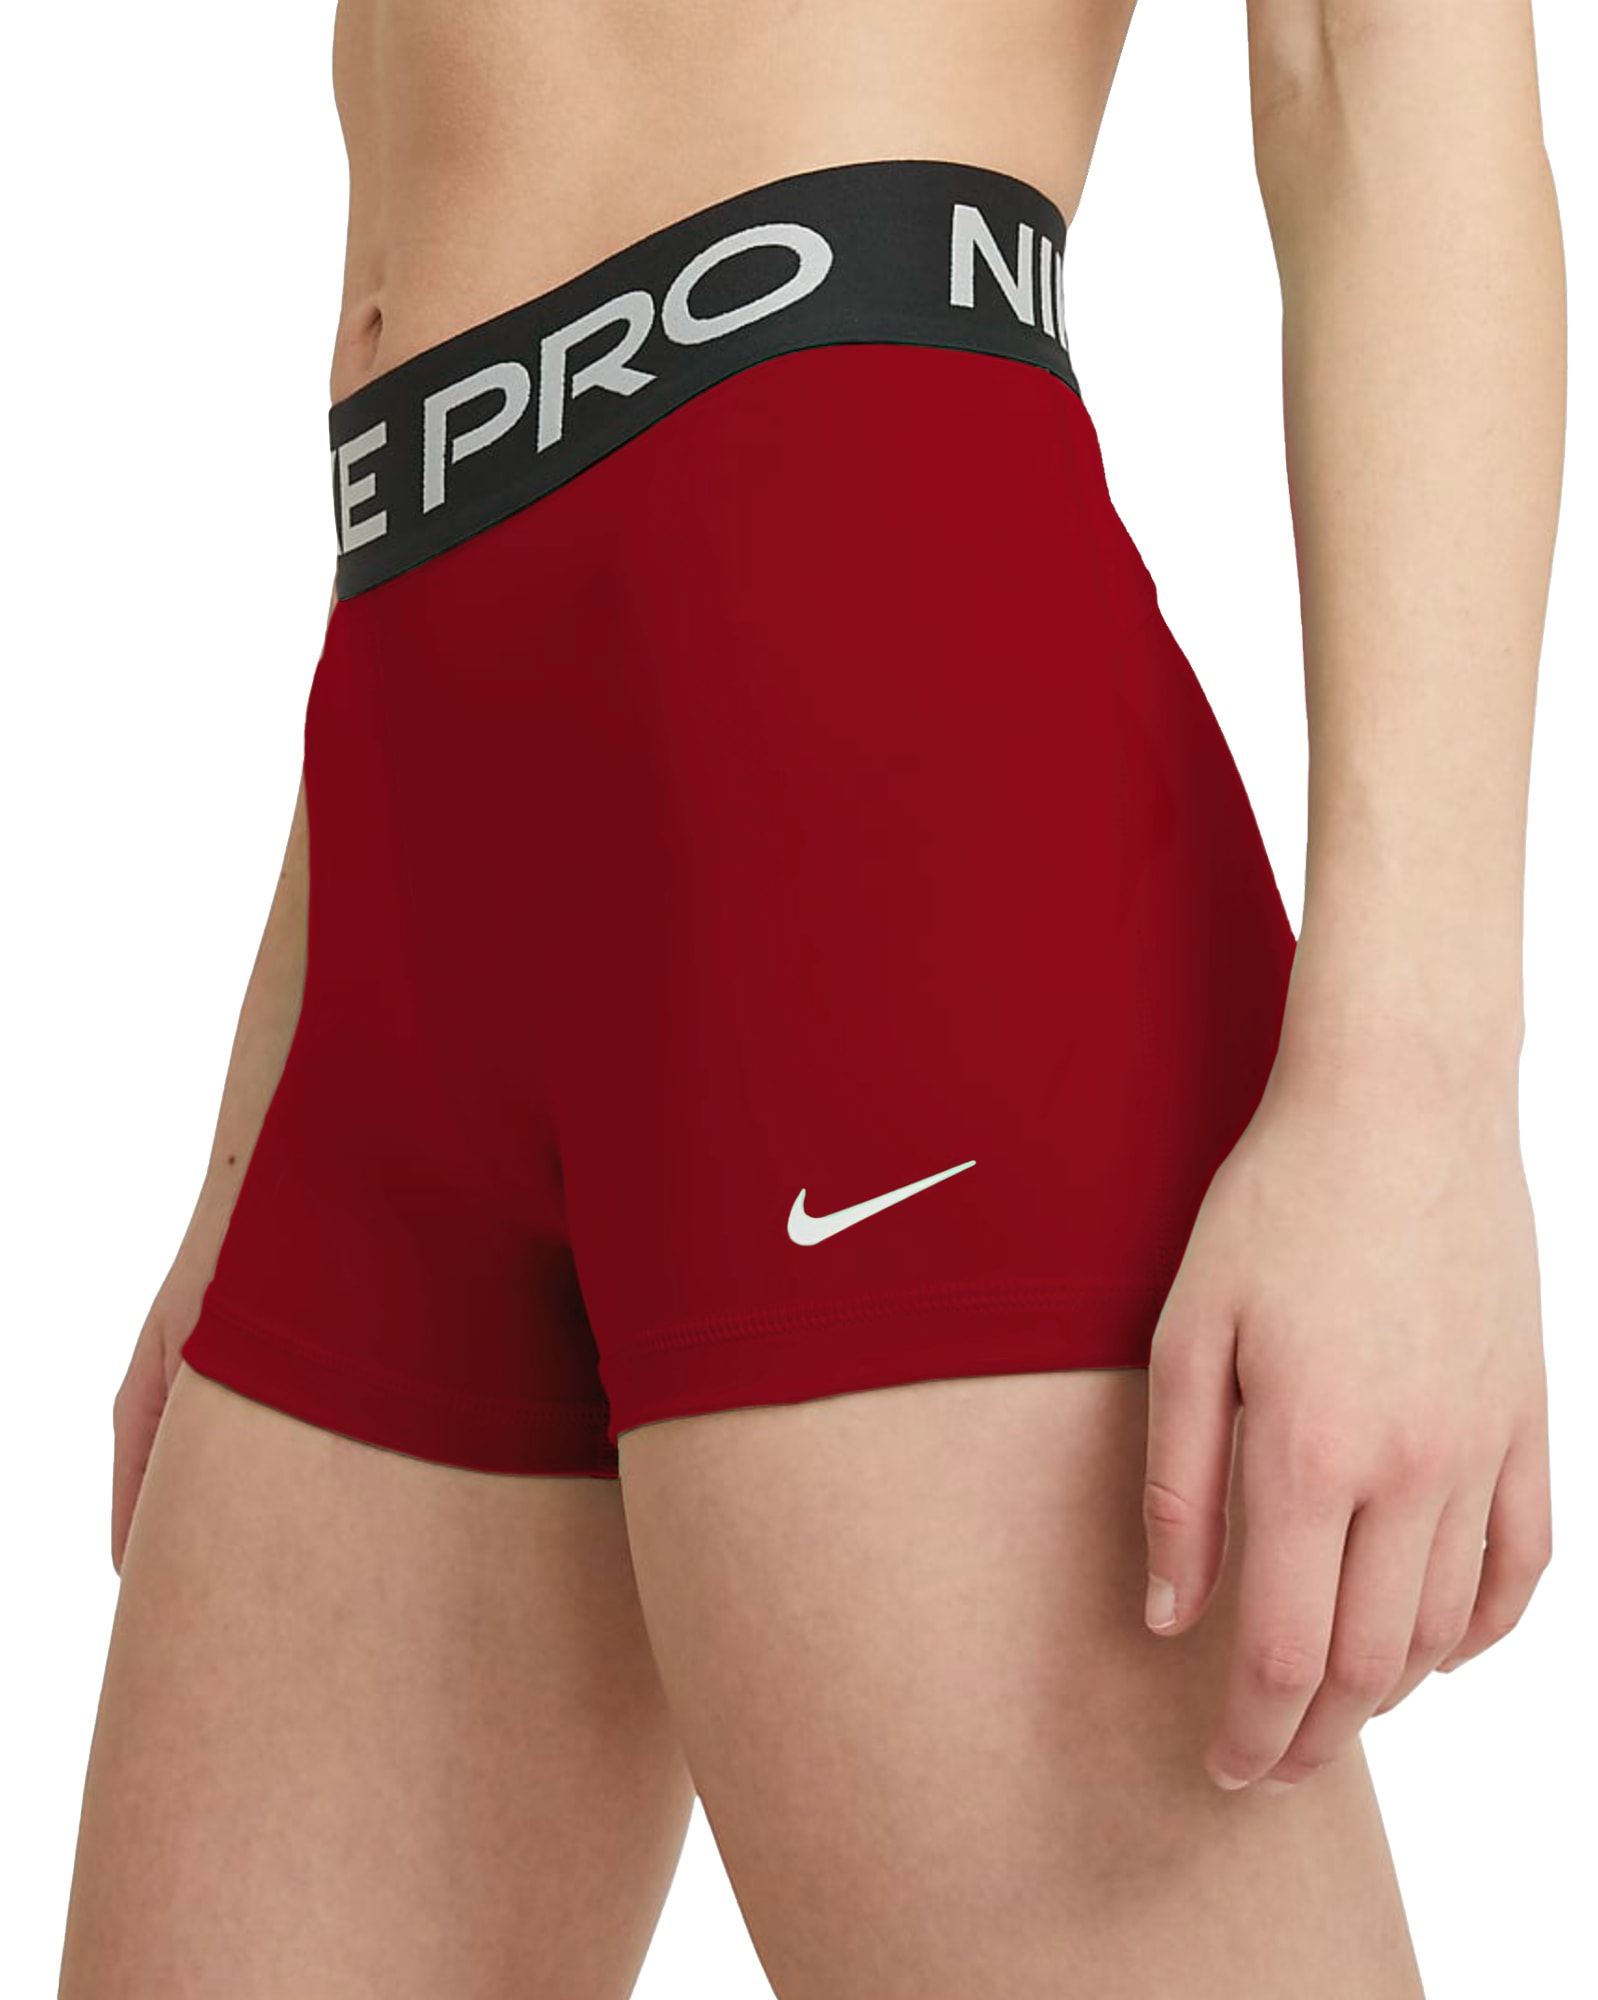 Pro Shorts Women - Red, Black